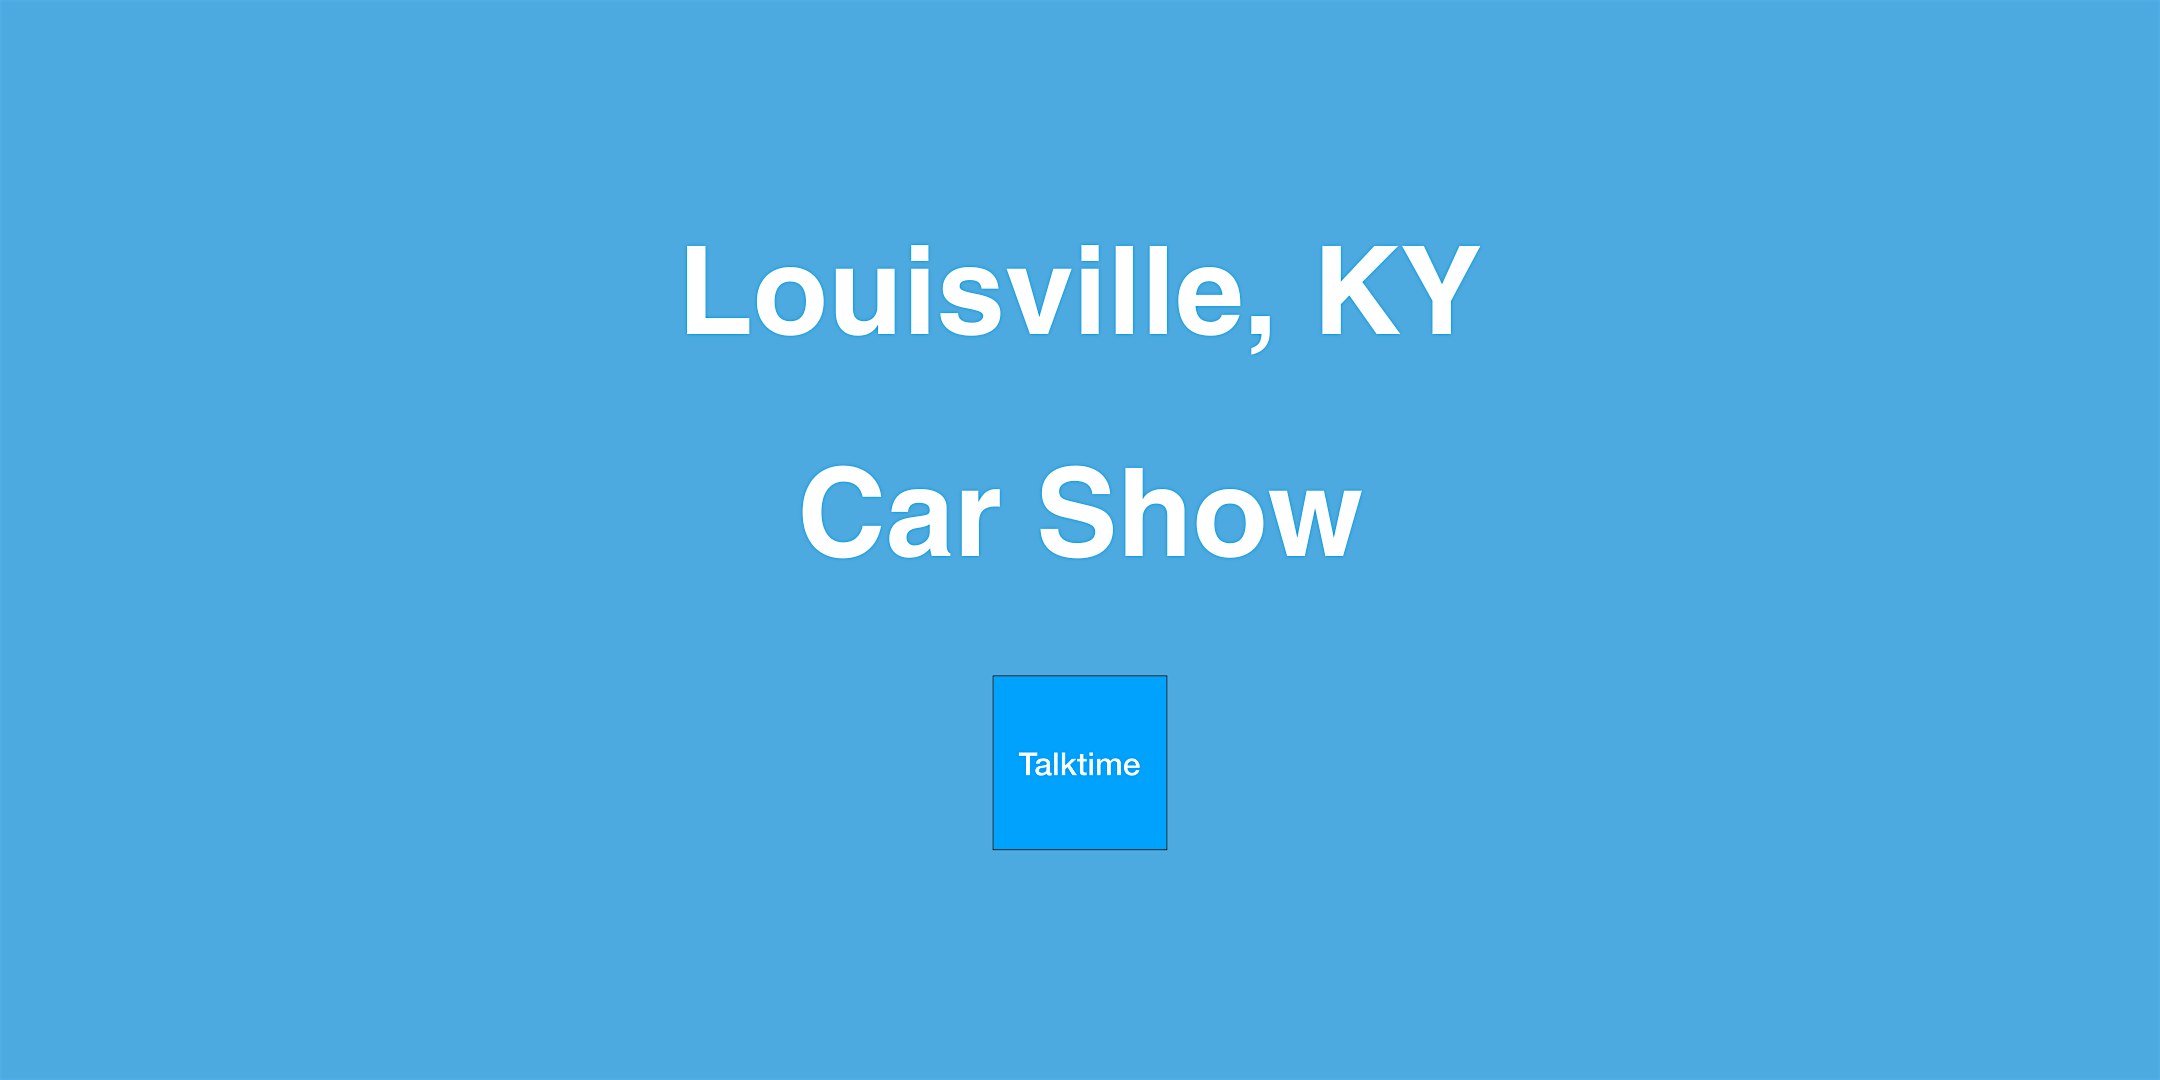 Car Show - Louisville